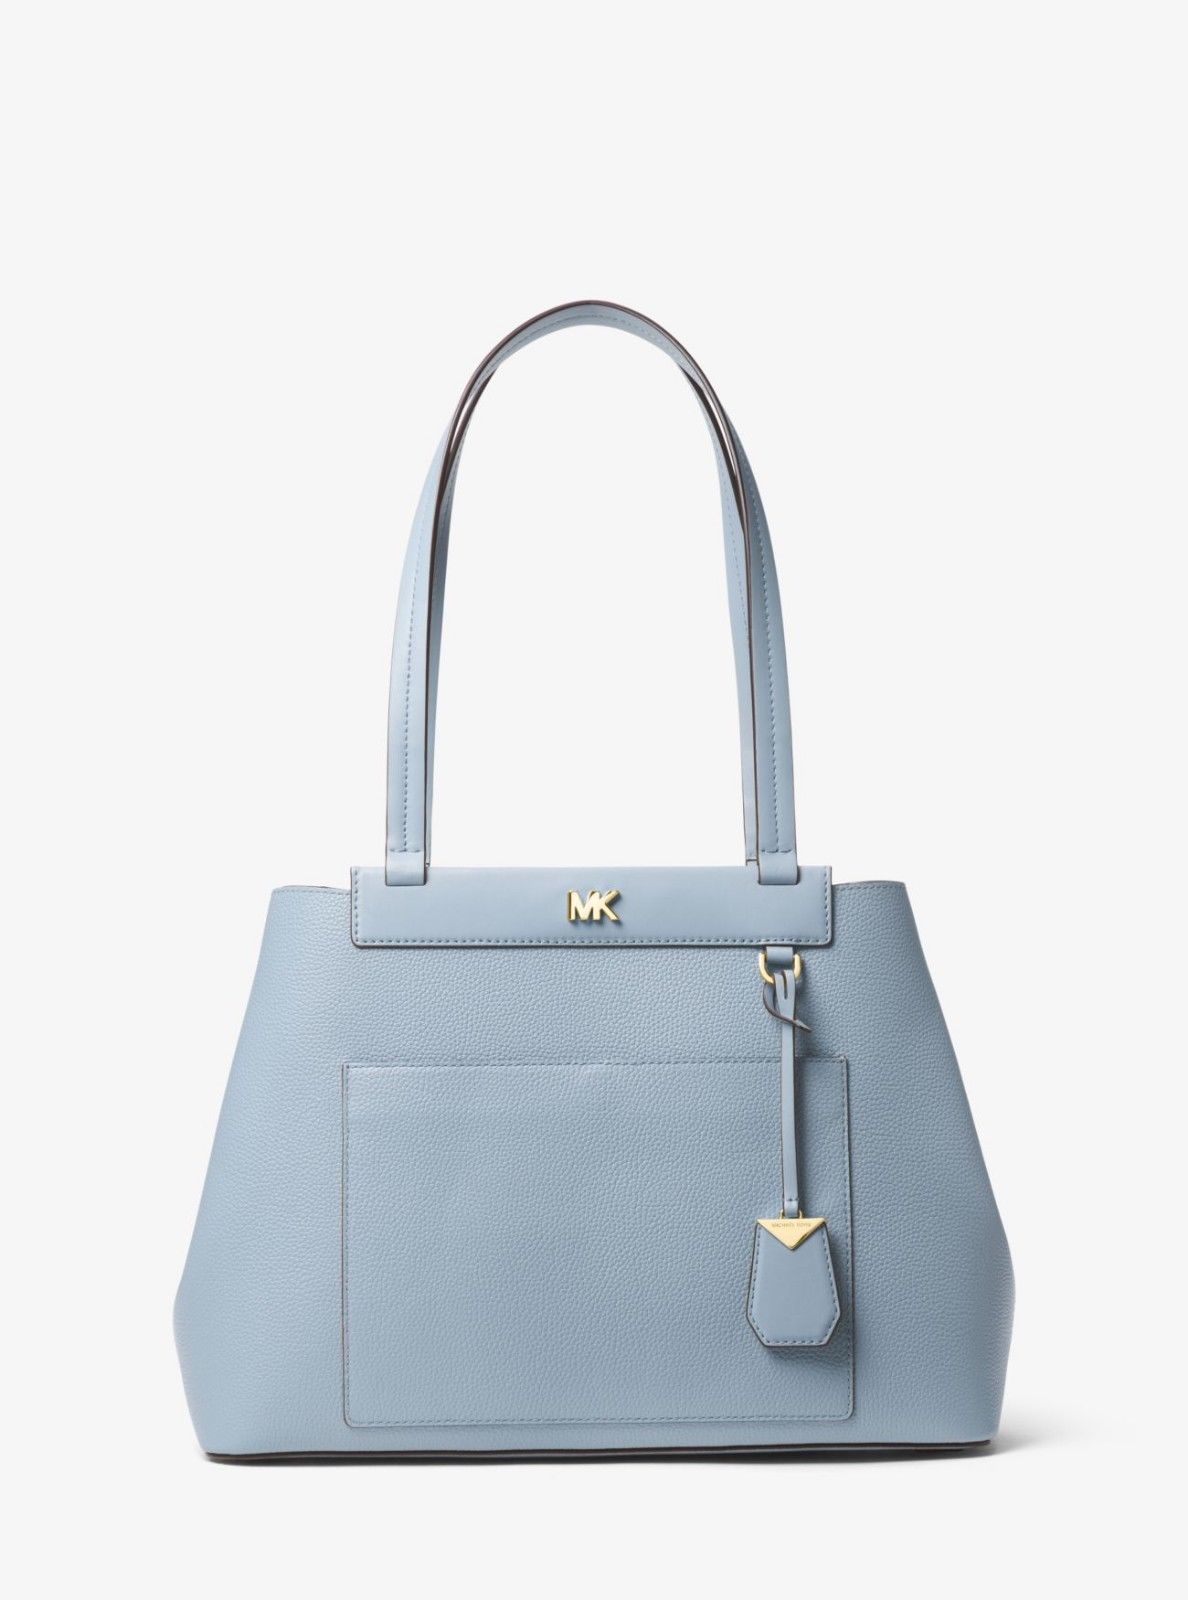 Michael Kors Meredith Medium Leather Tote Bag, Pale Blue handbag satchel NWT - $139.00